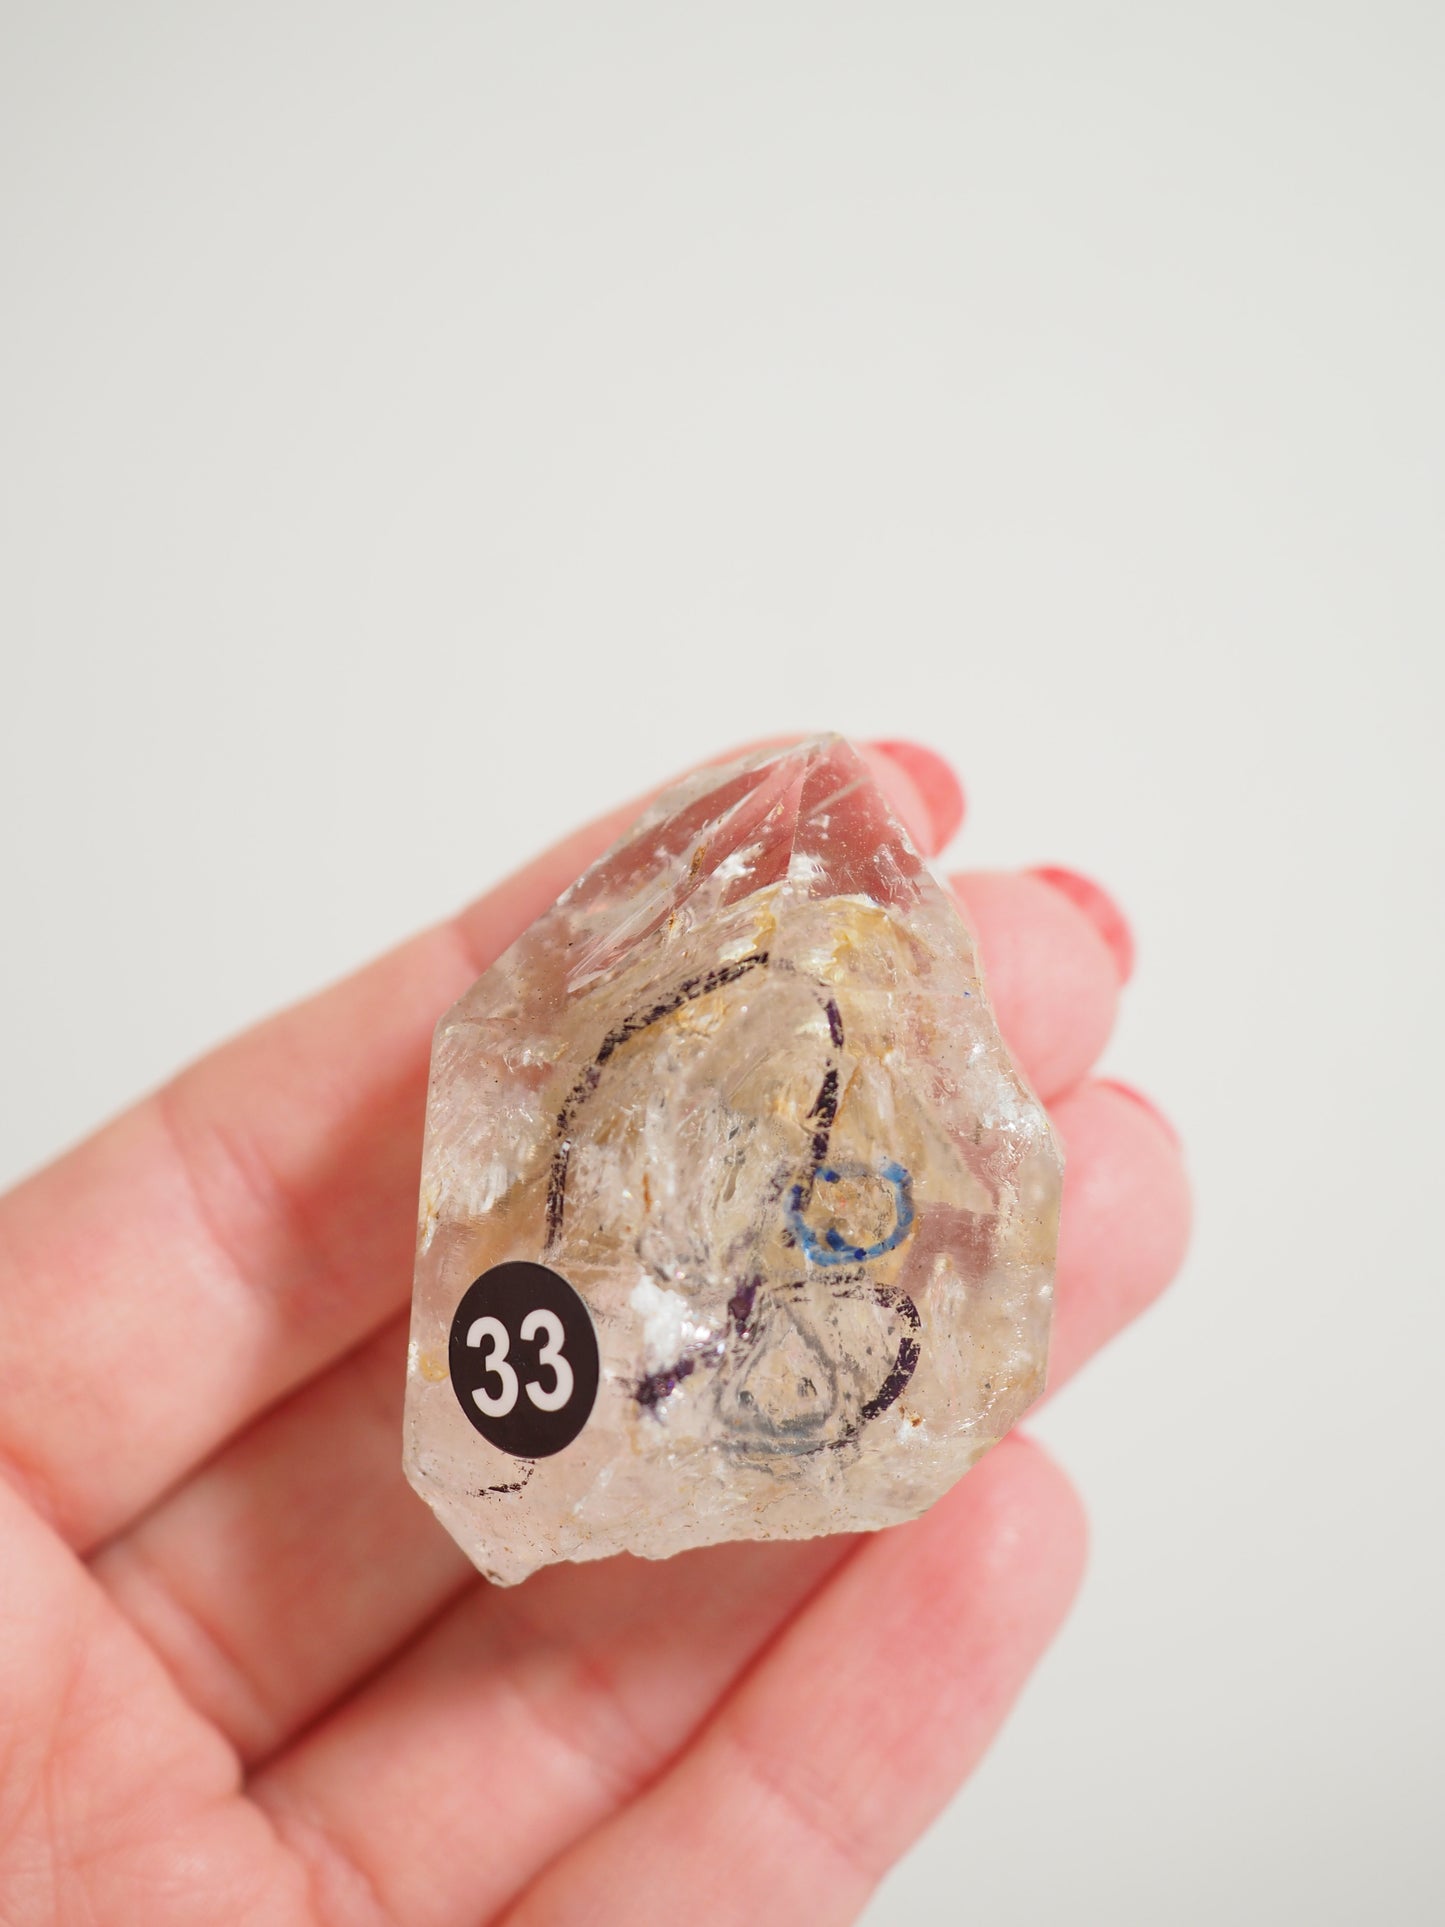 ENHYDRO Bergkristall mit Wassereinschluss & 3x Bubble . Enhydro Clearquartz [33] ca. 5cm - aus Guishou Province China